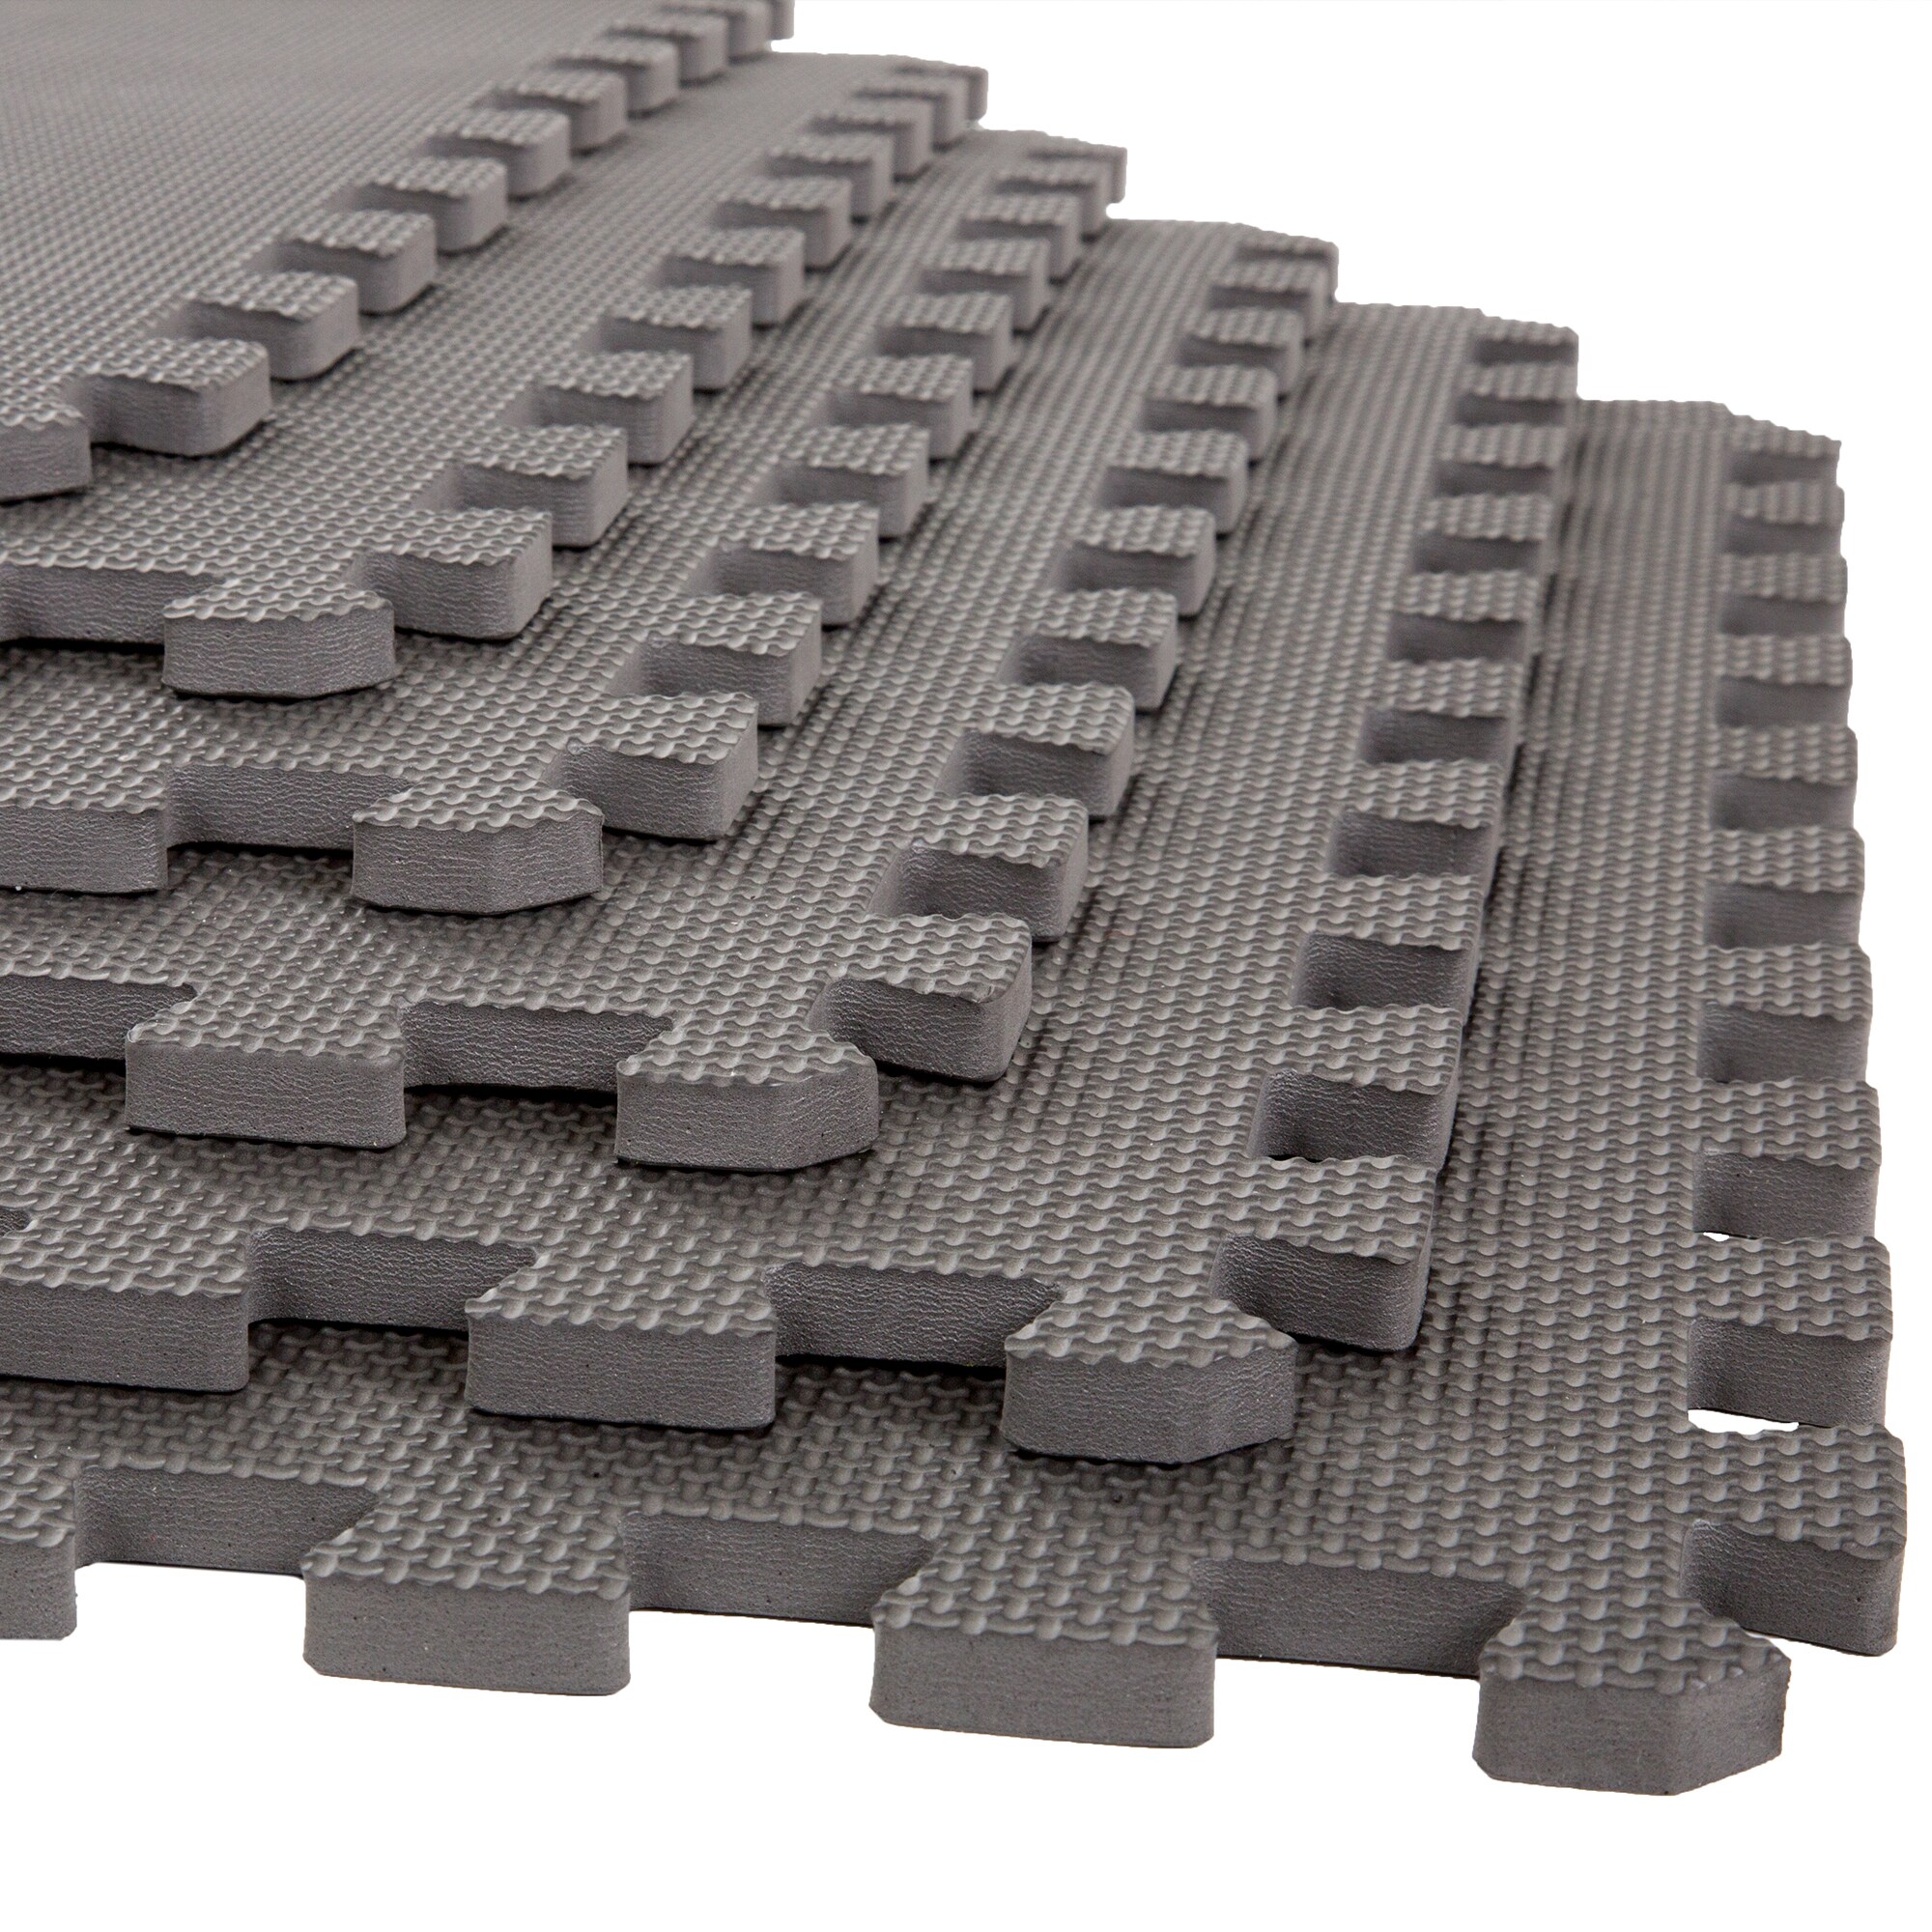 Competitive Price 24Sqft 6X Interlocking Anti Fatigue Mat Tile